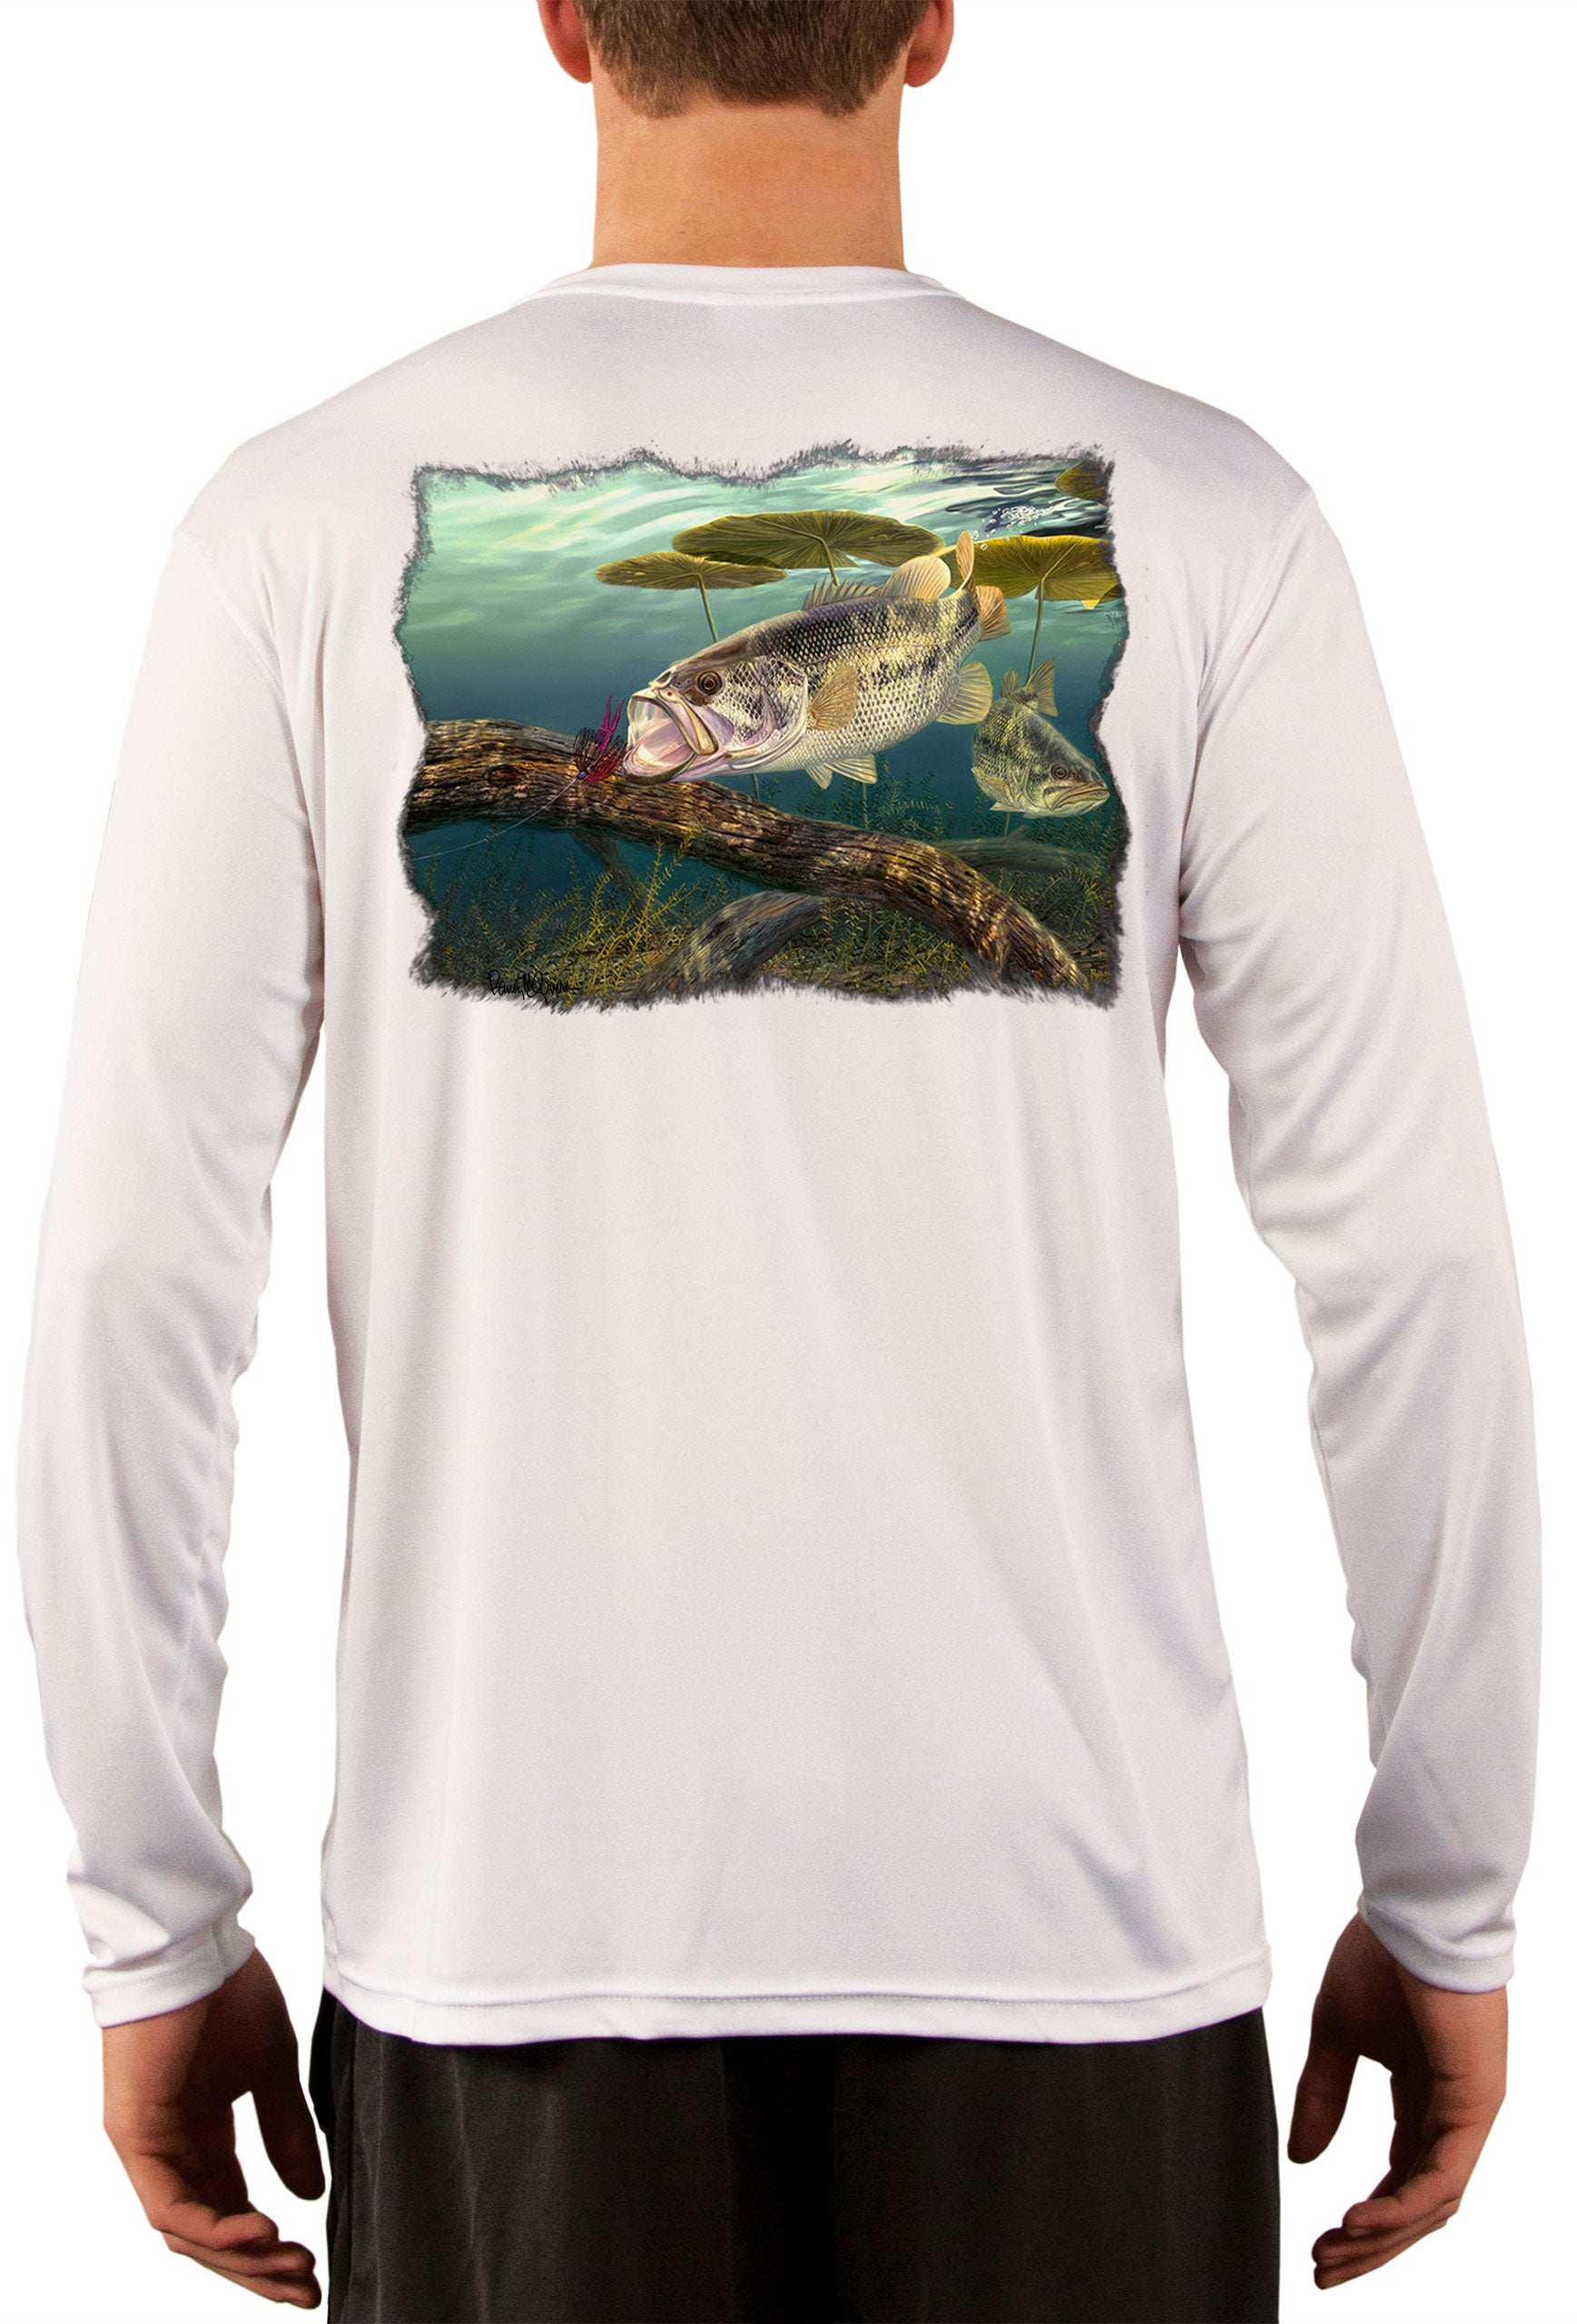 Skiff Life Large Mouth Bass Men's Fishing Shirts by Award Winning Artist Randy McGovern White / 3XL